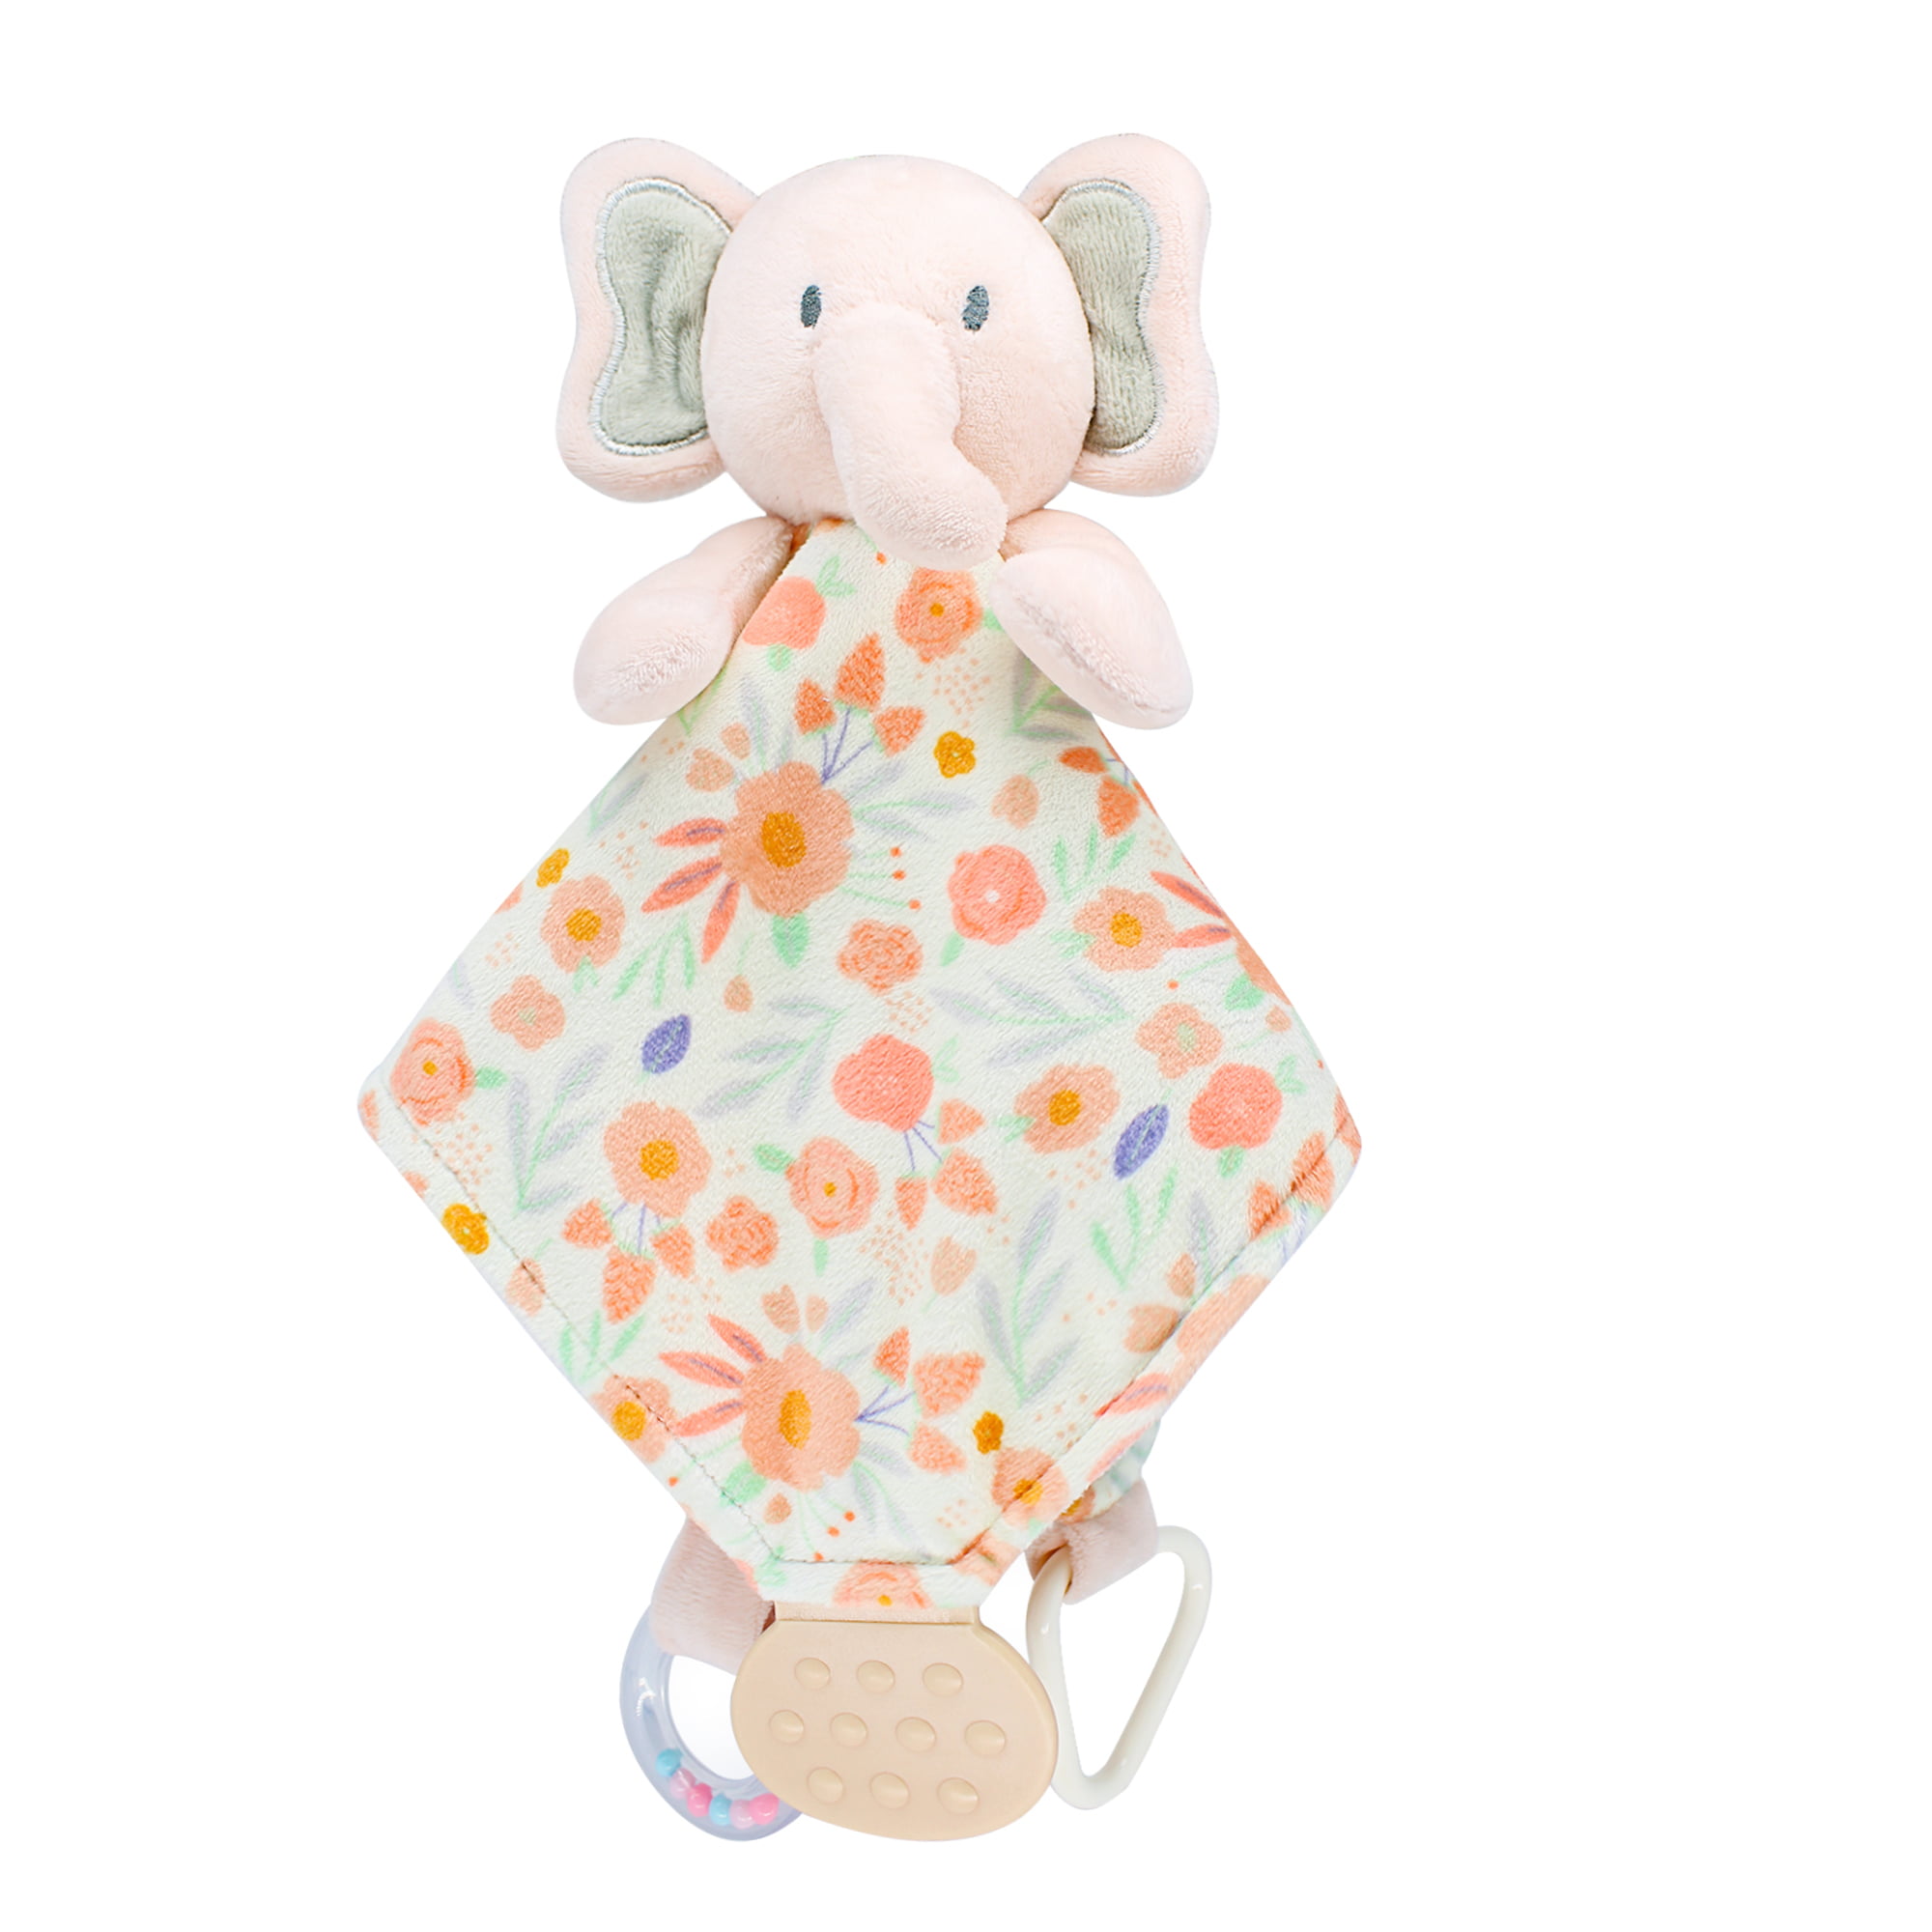 Baby Taggie Blanket. Tag Blanket. Baby Lovey. Elephant Blanket